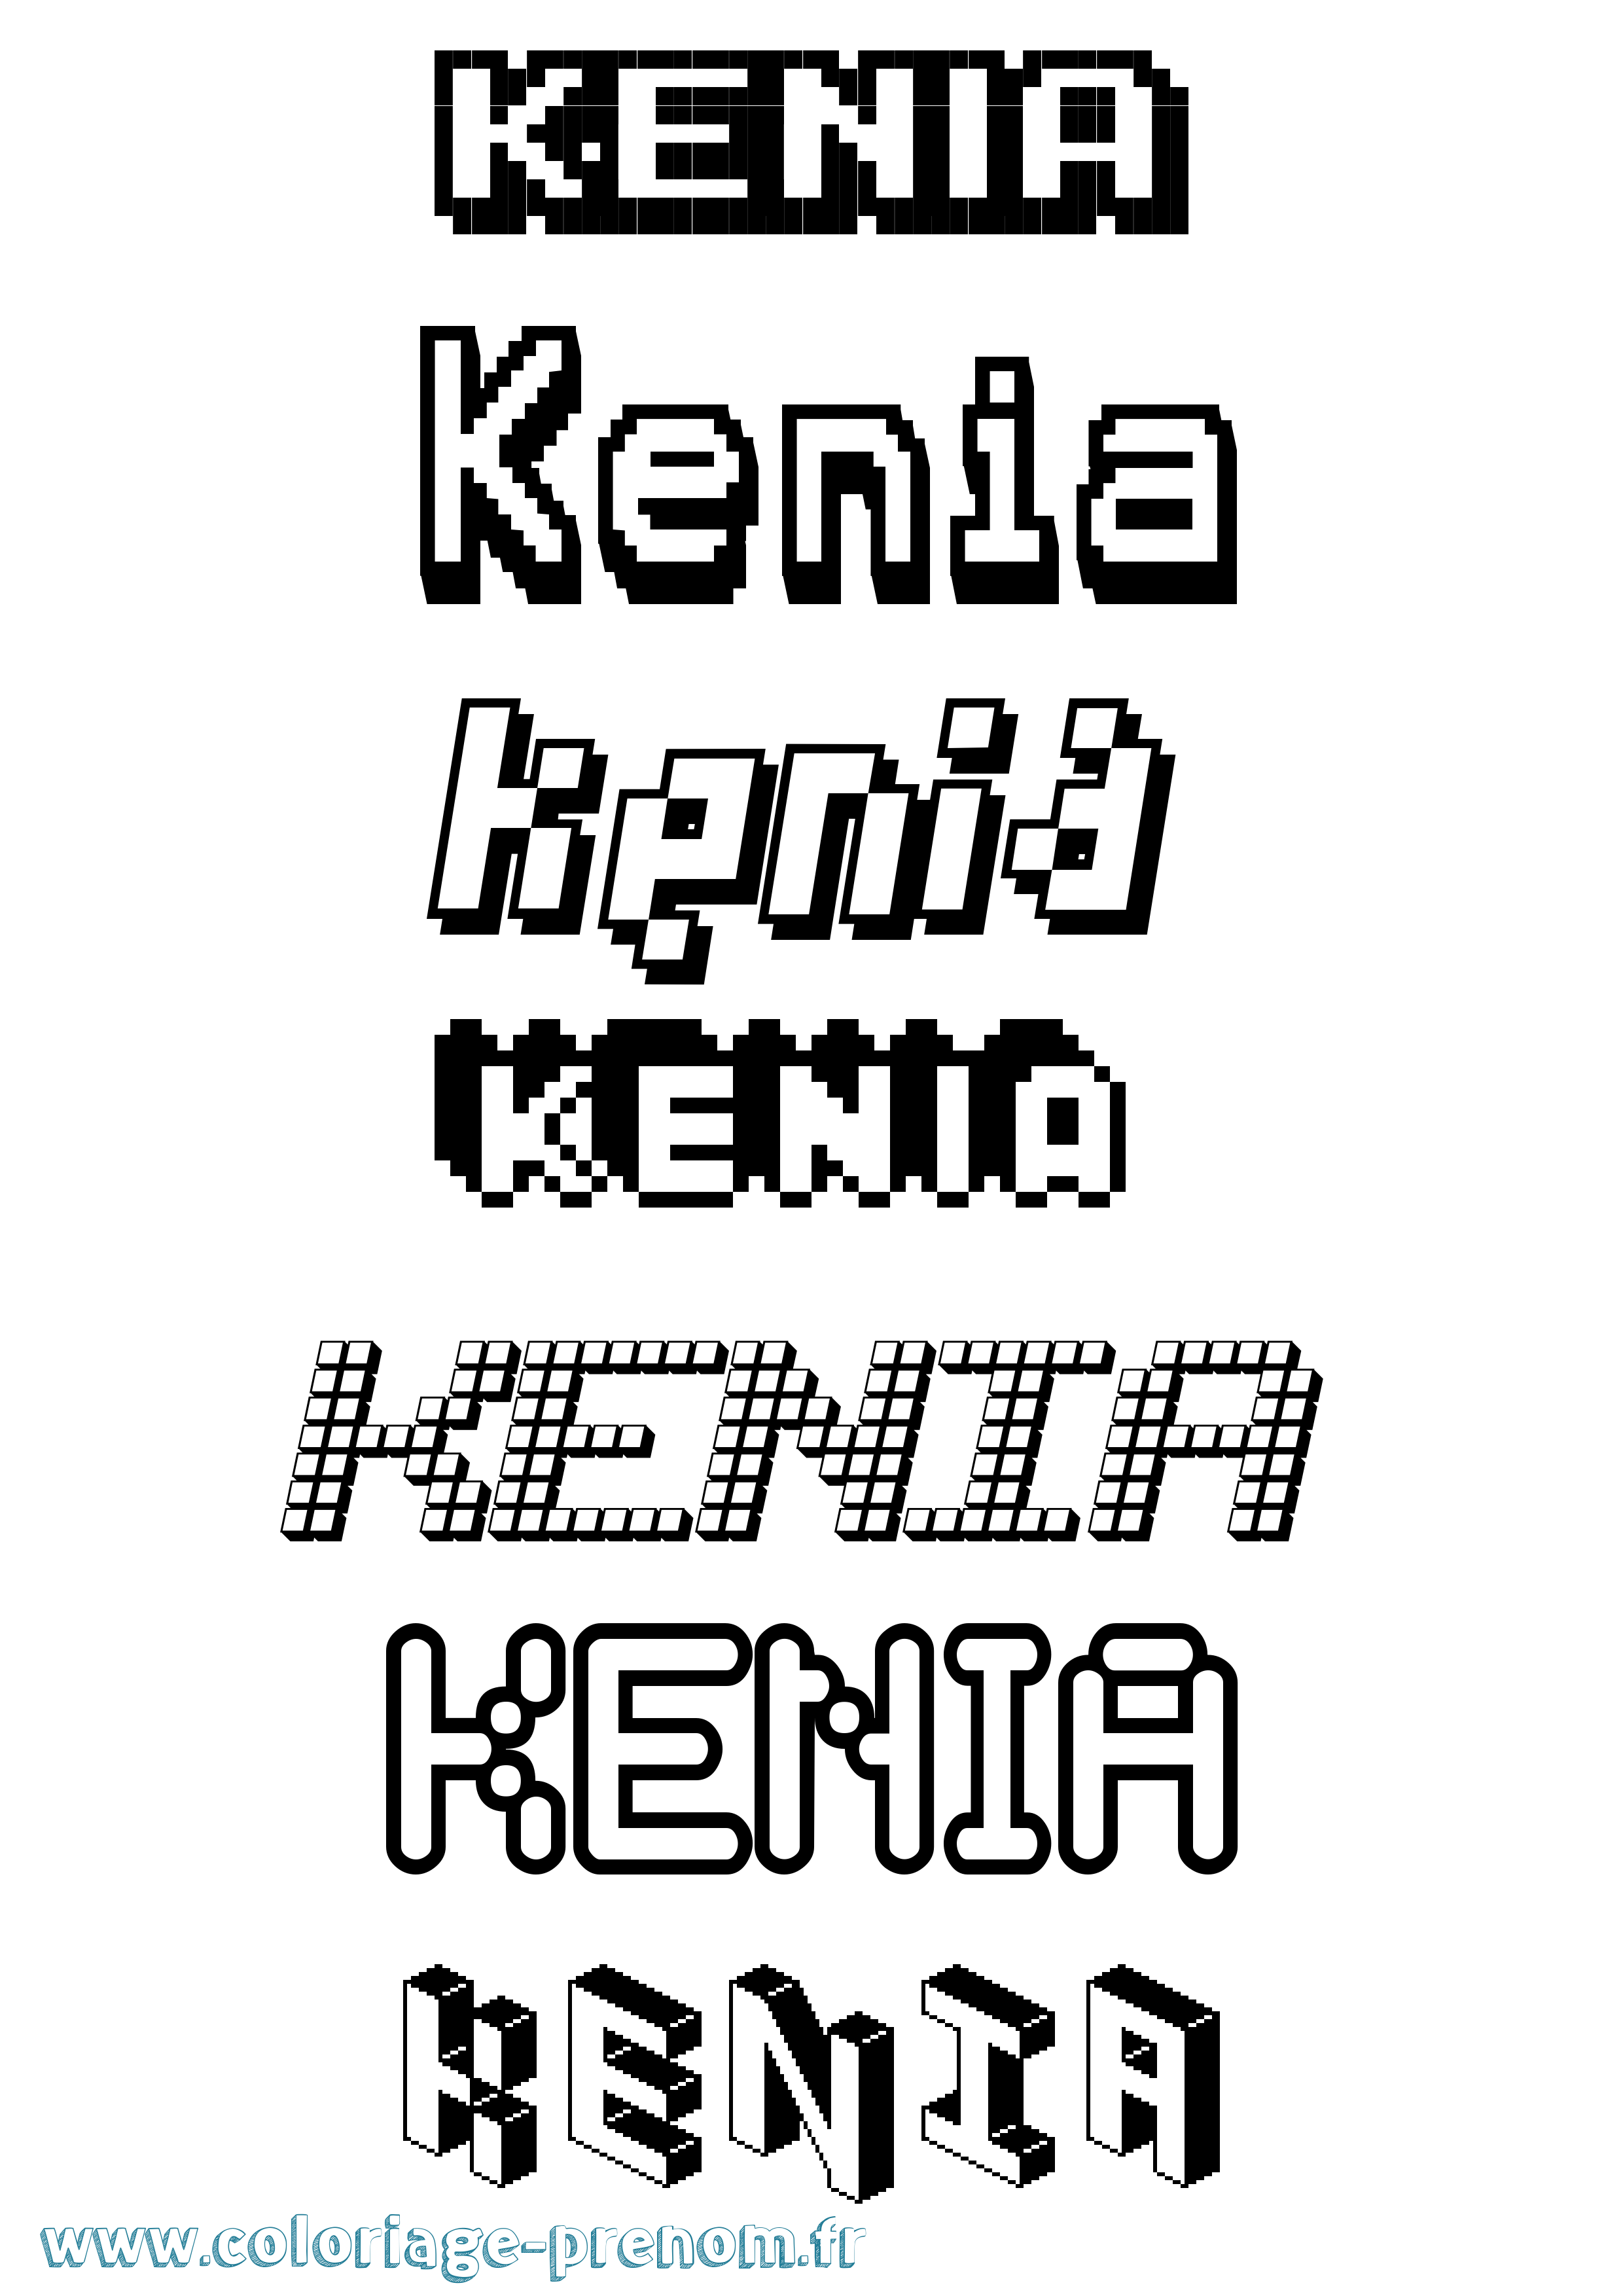 Coloriage prénom Kenia Pixel